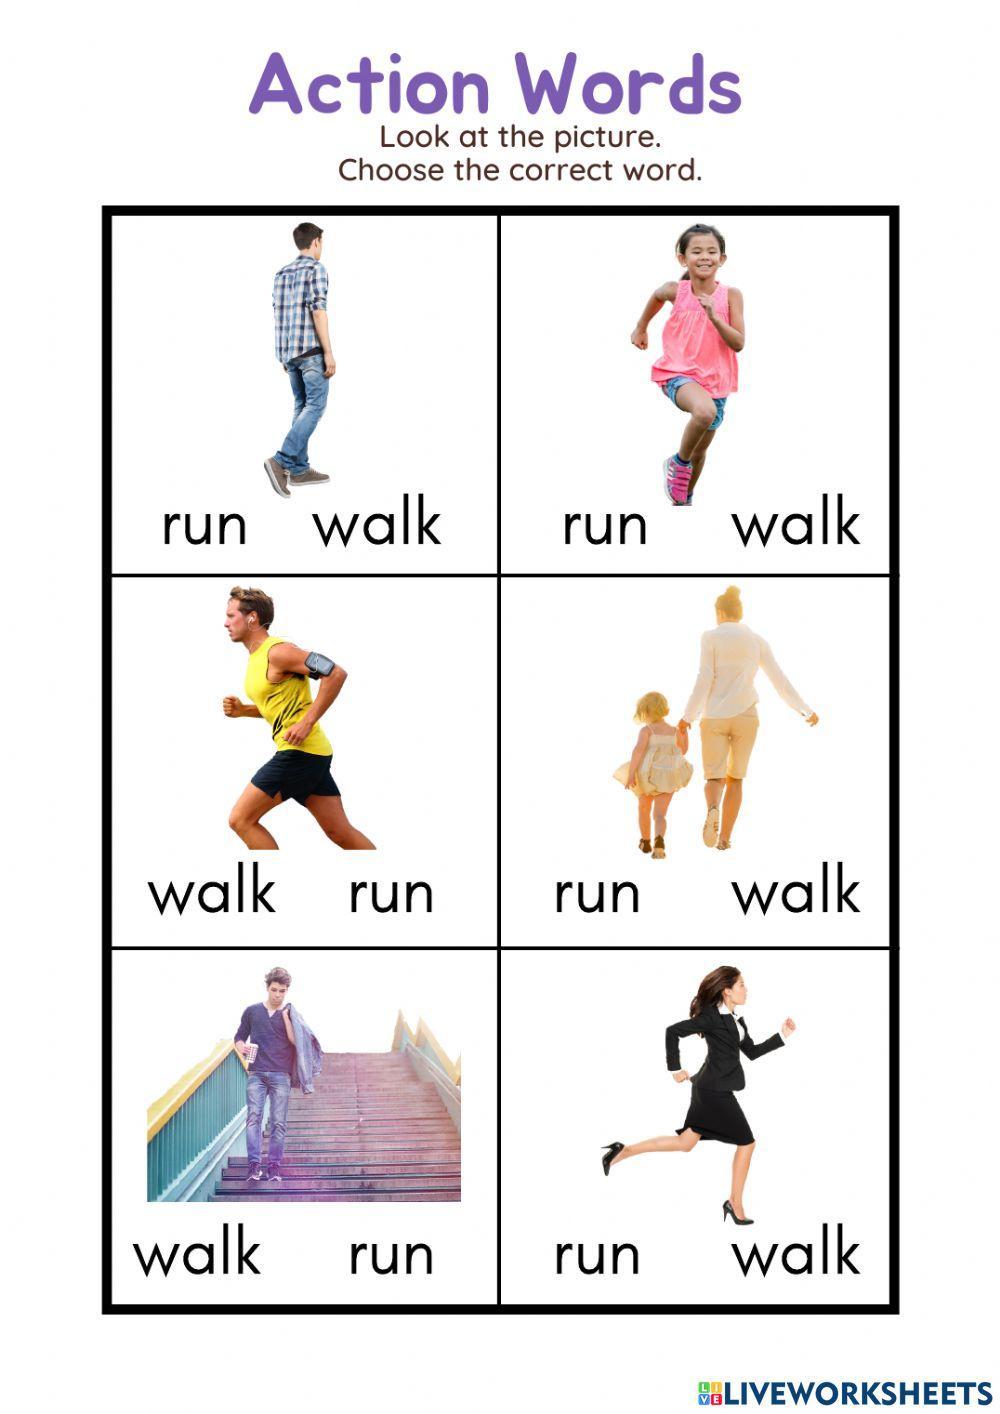 Action Words: Walk, Run 2